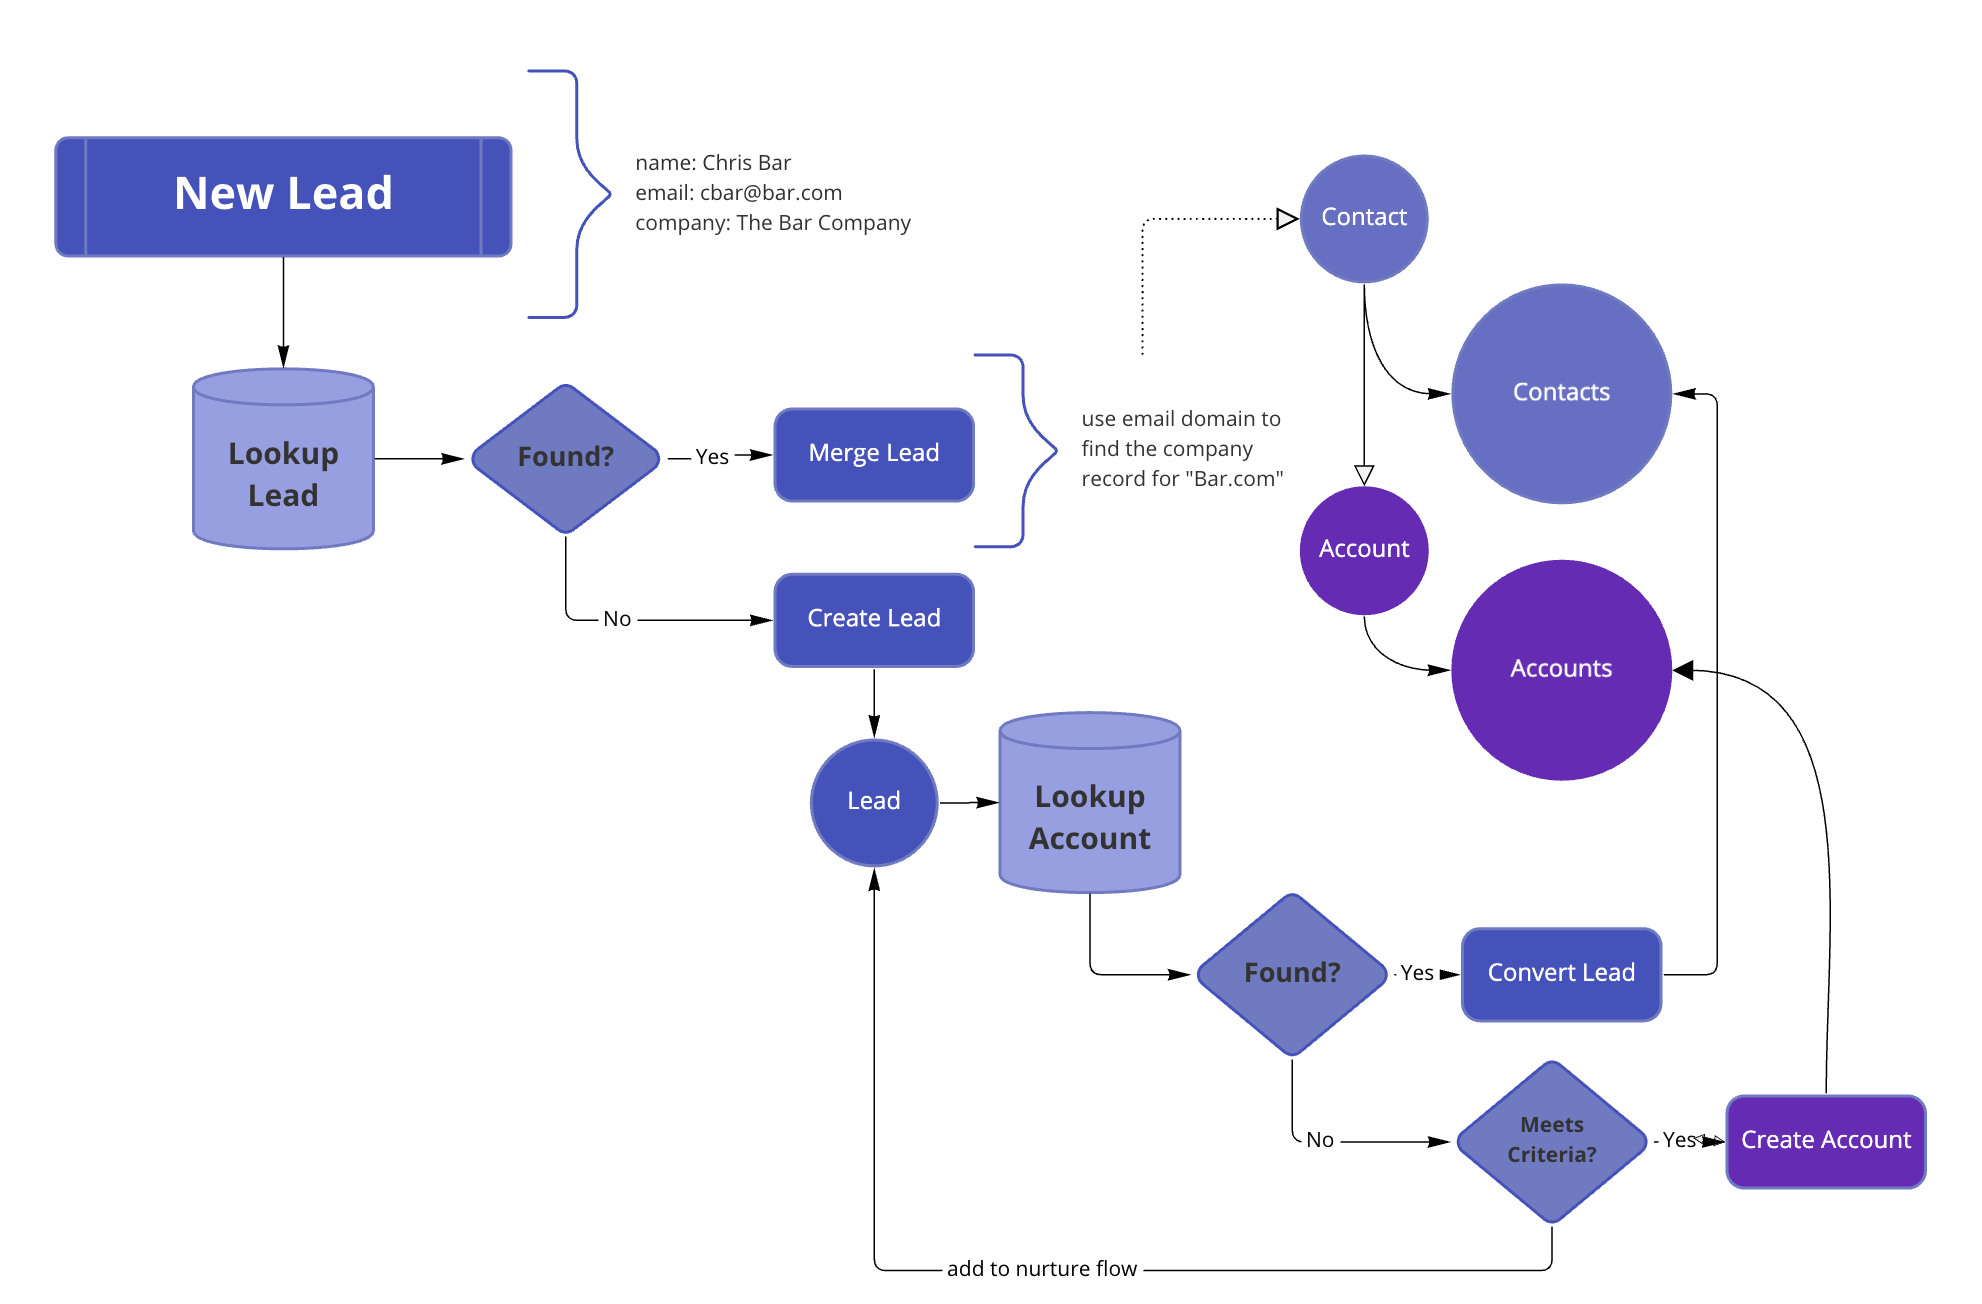 Example Of Work Process Flow Chart Makeflowchart Com - vrogue.co